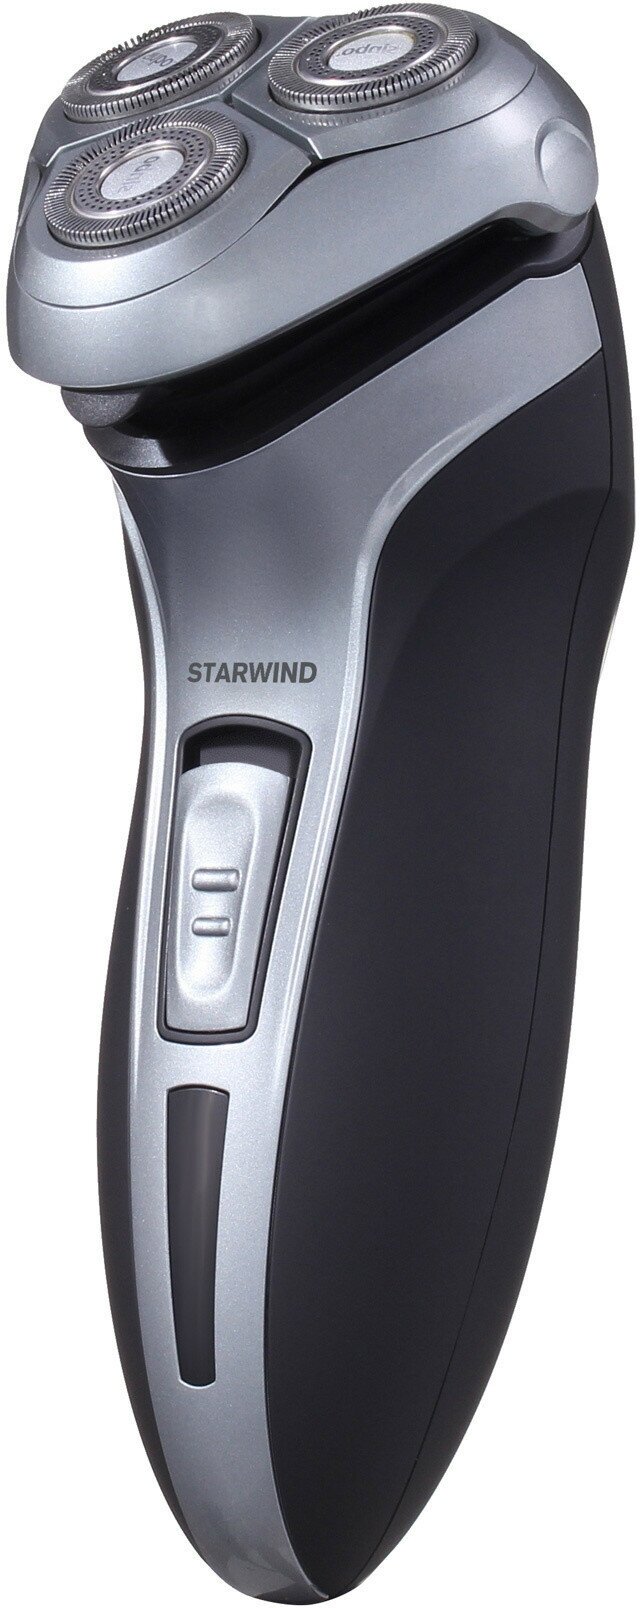 Электробритва Starwind SSH 1515 серебристый и черный